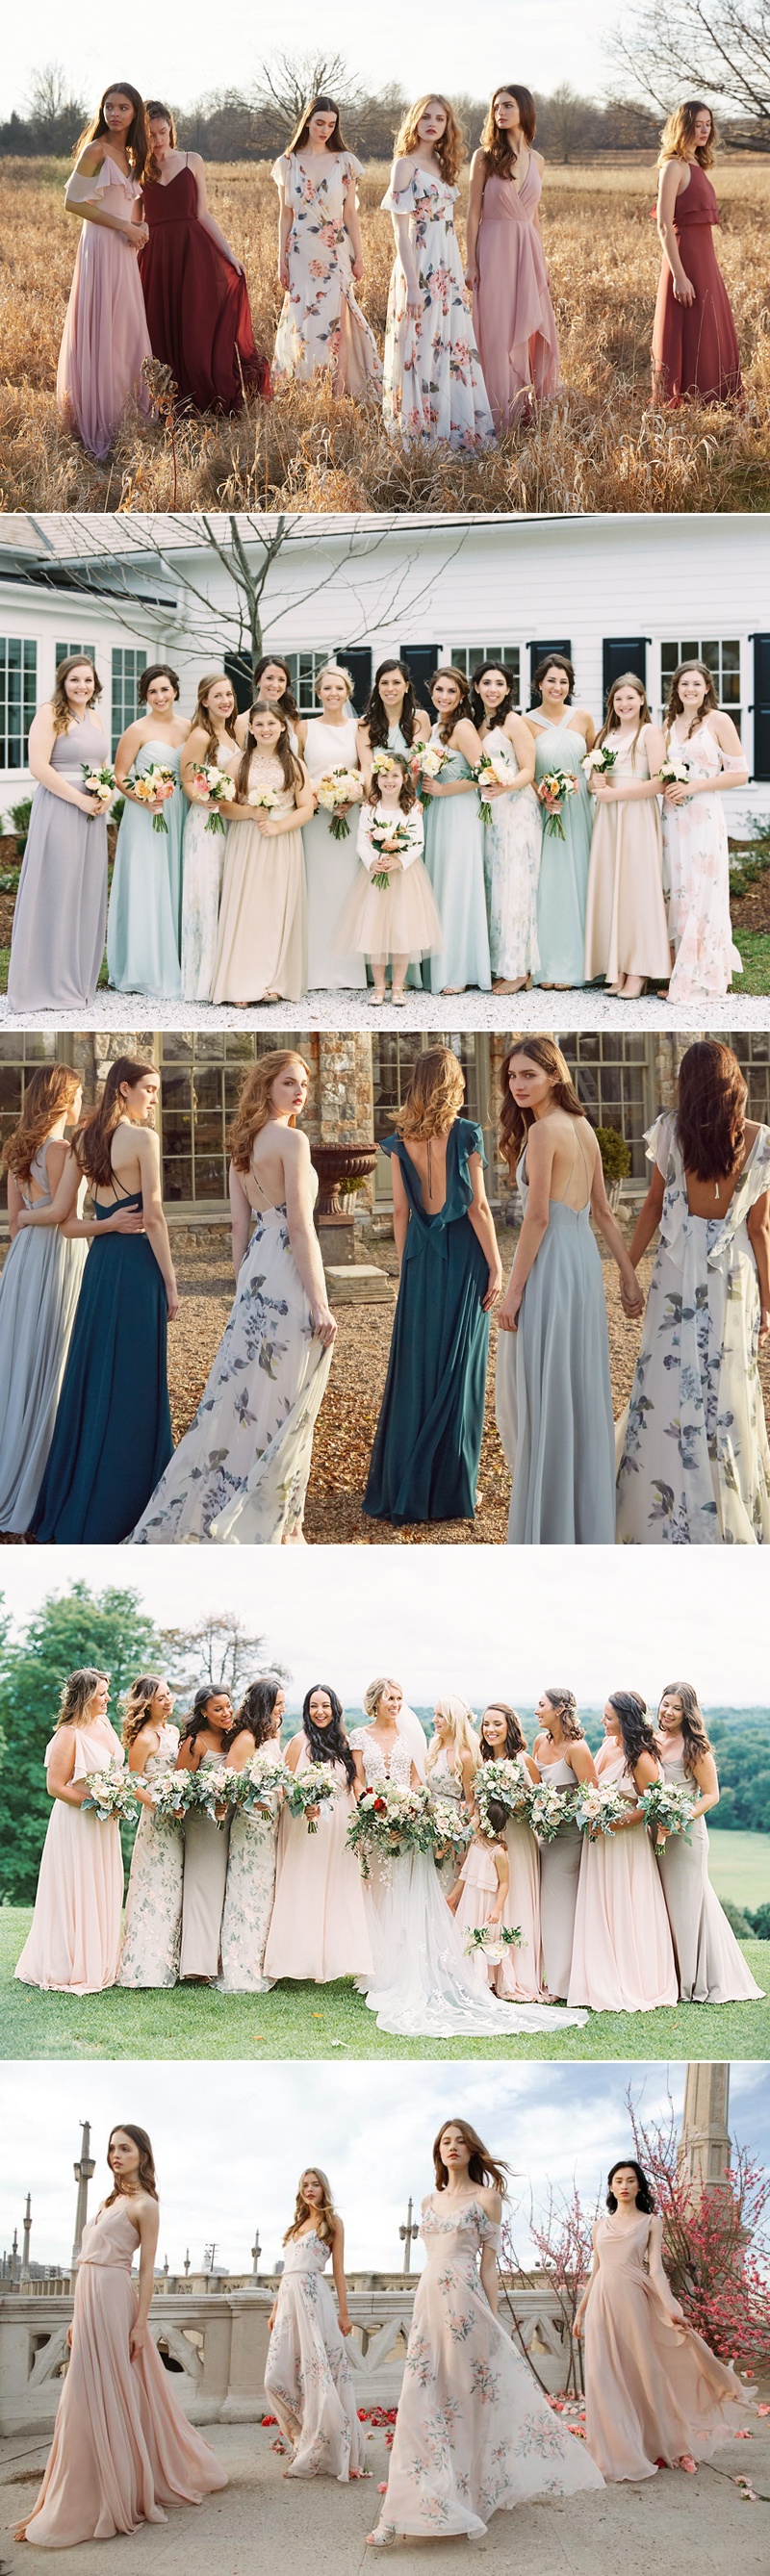 mismatched-bridesmaiddress04-solid-floral